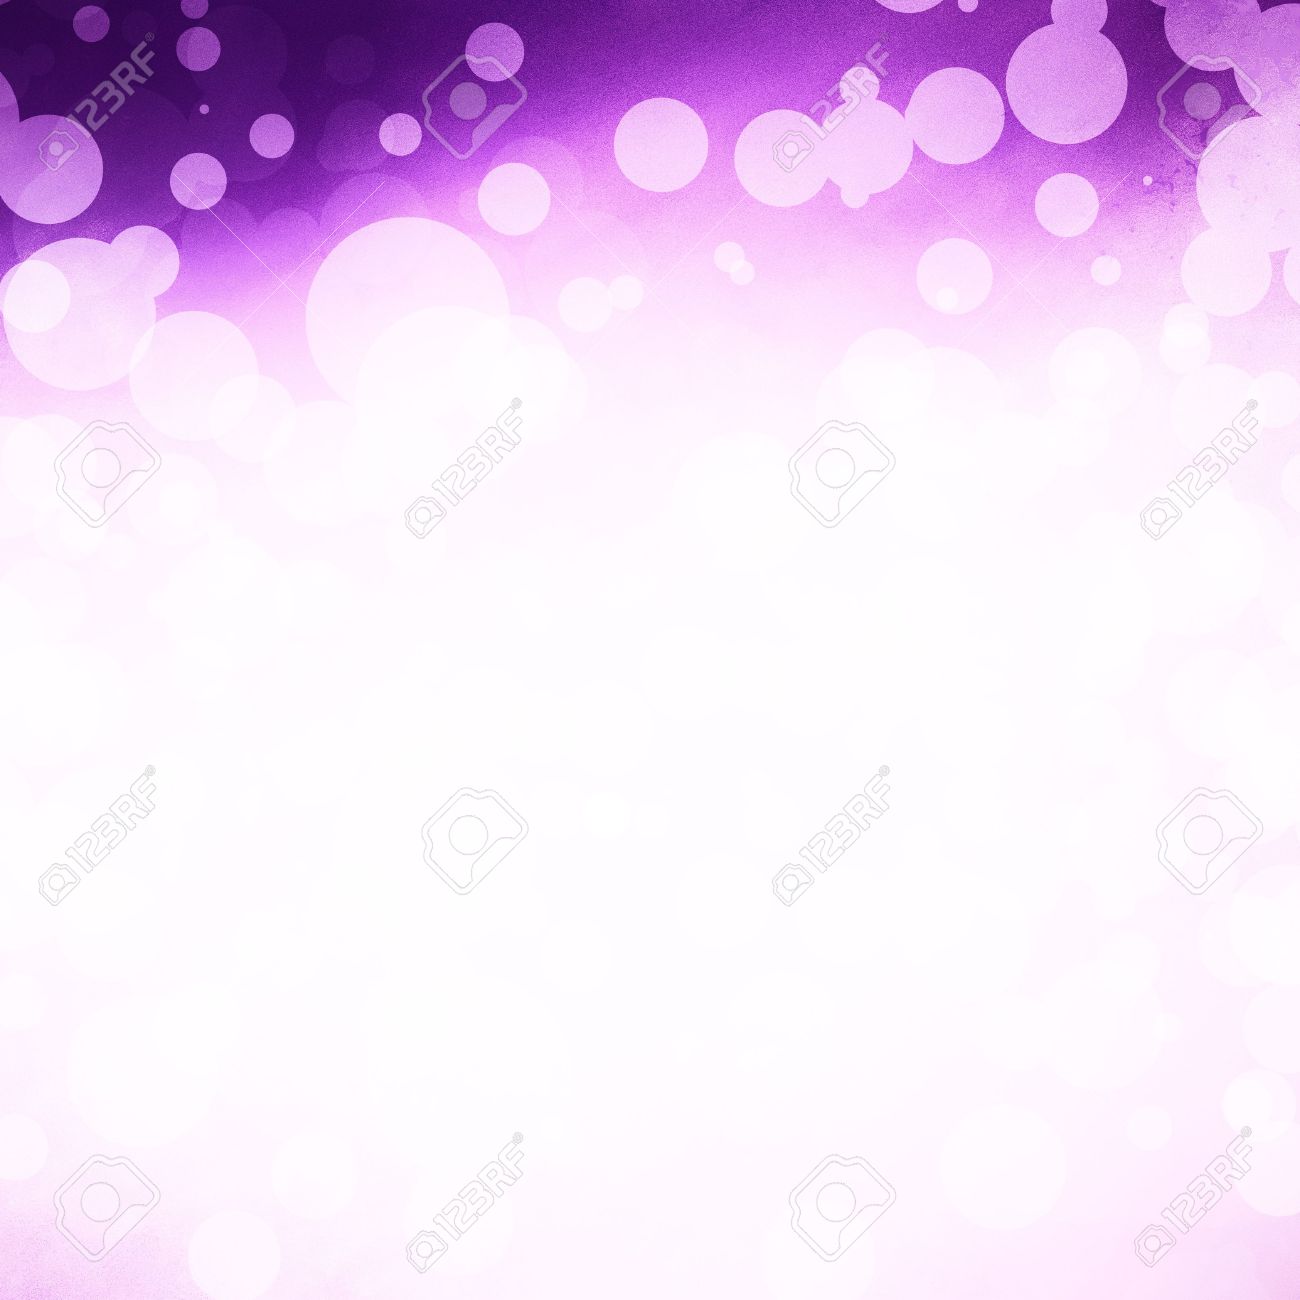 Purple And White Backgrounds - WallpaperSafari